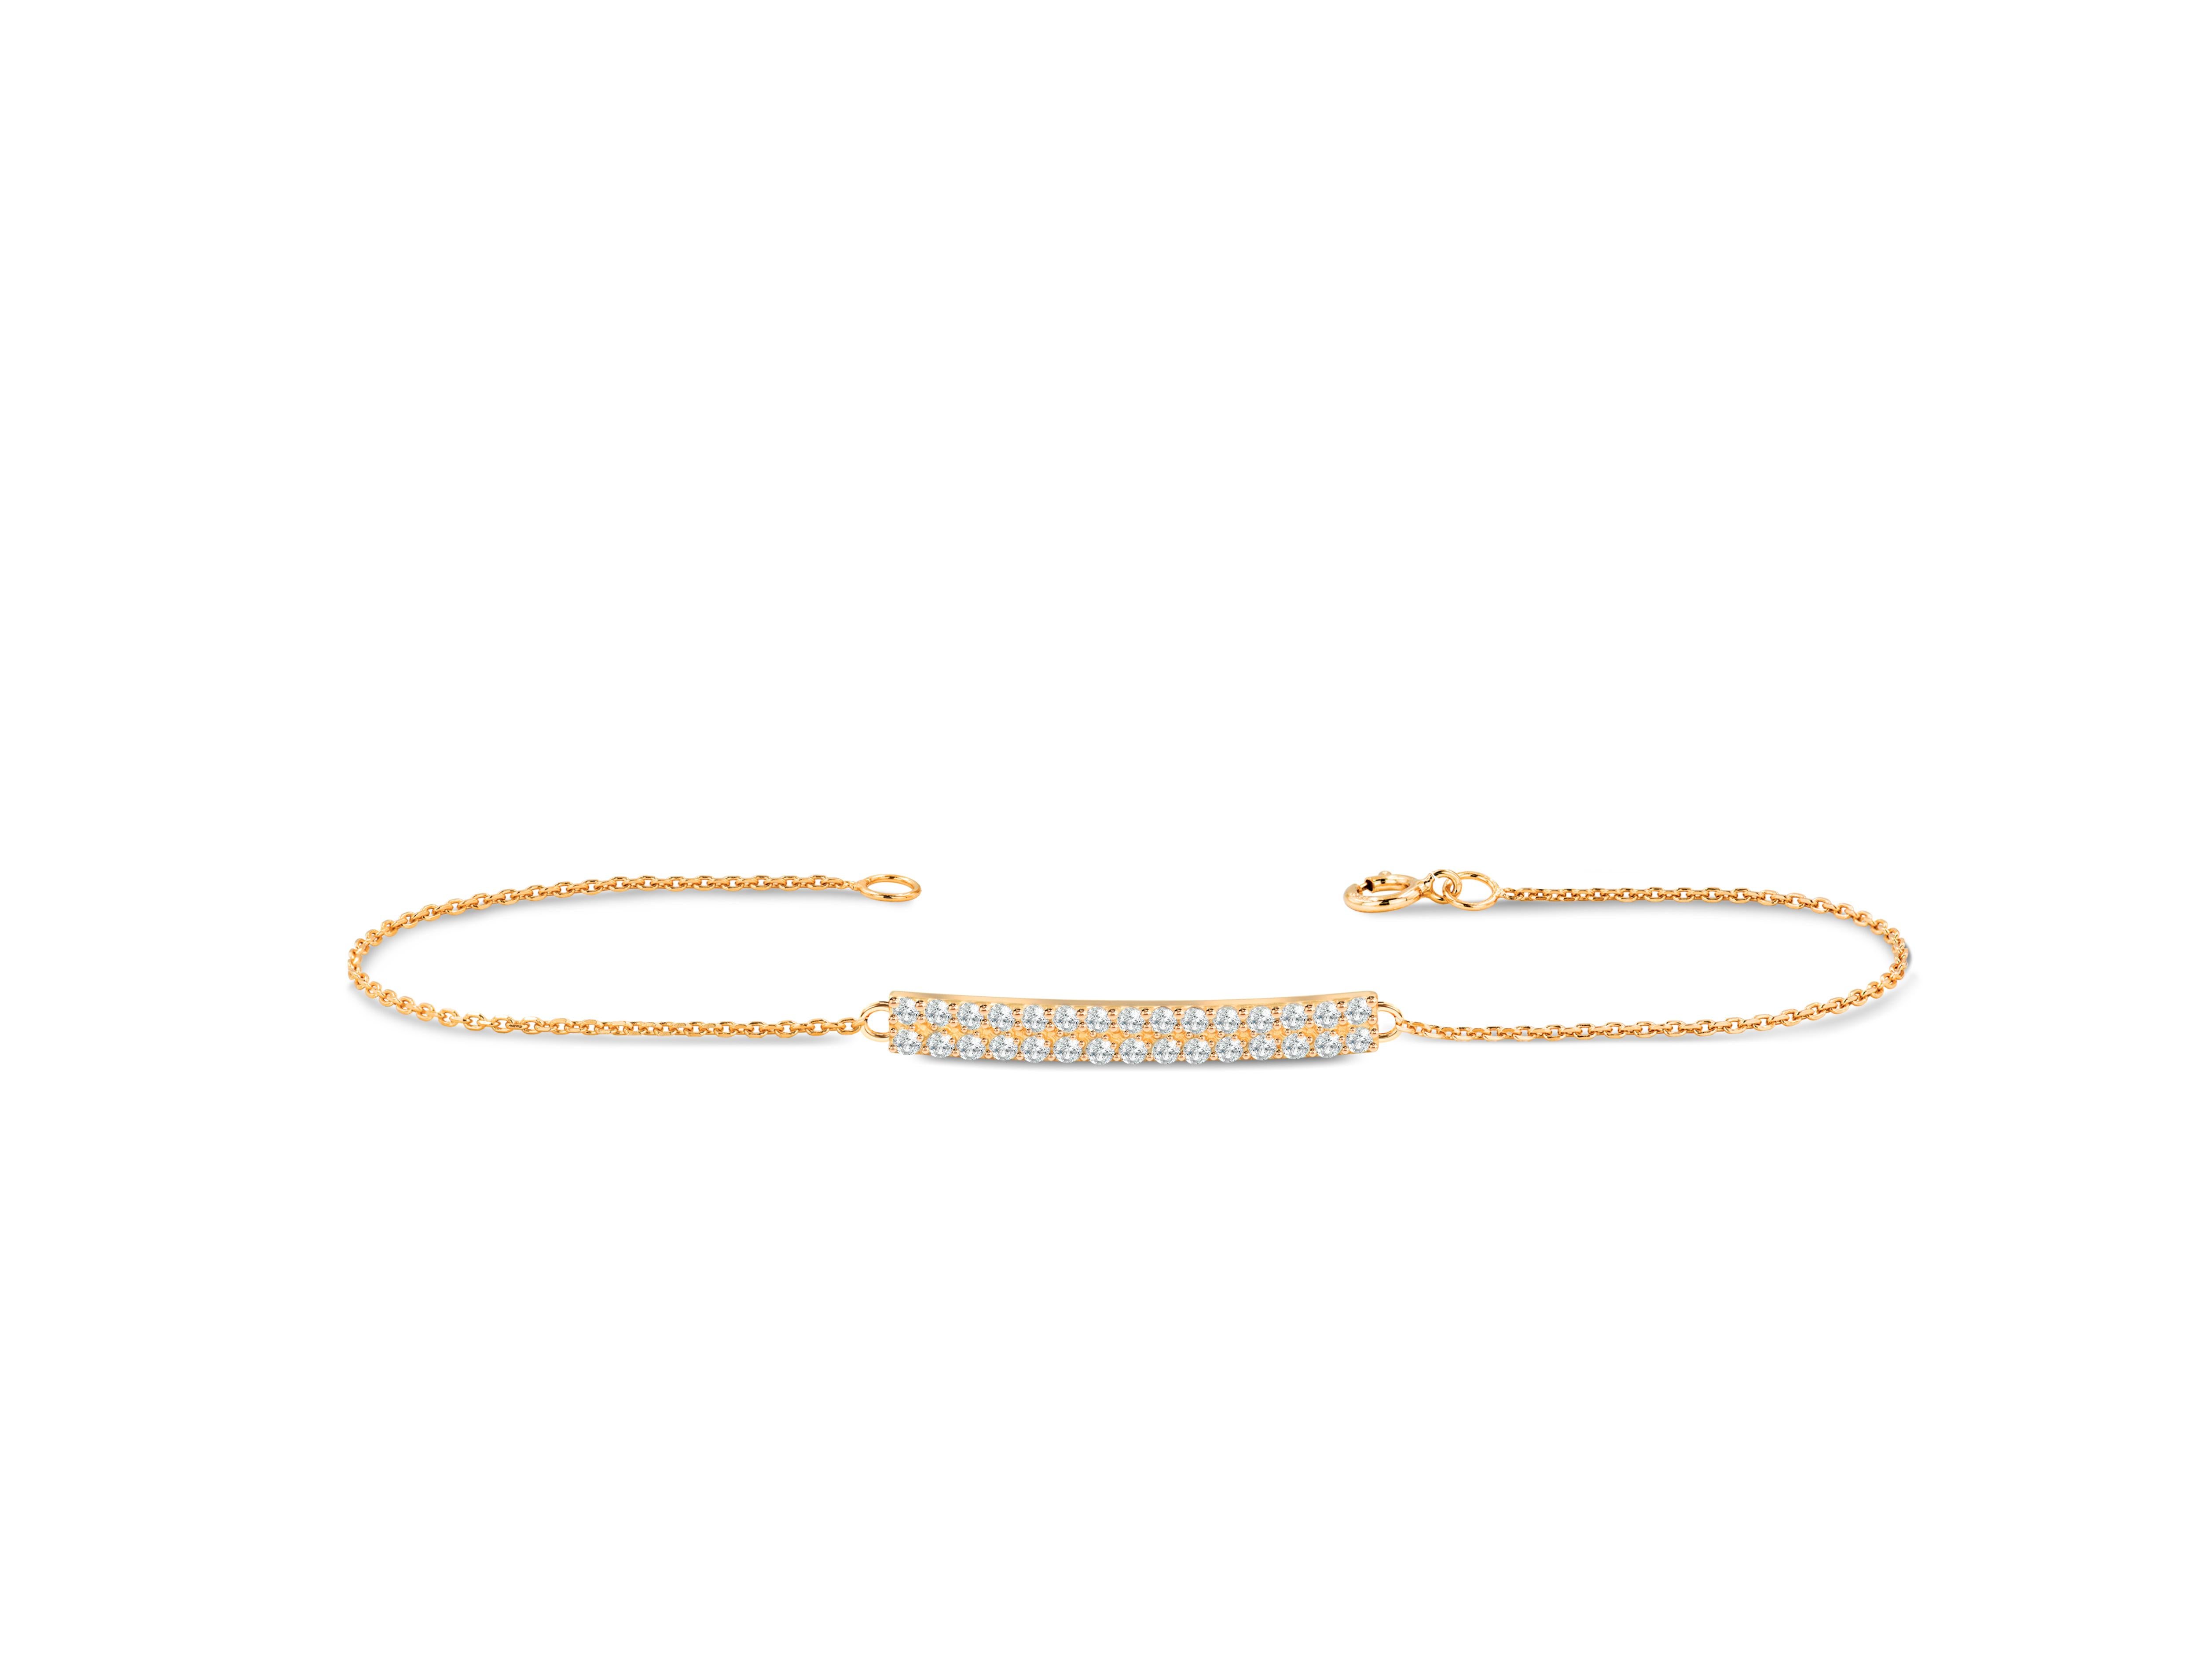 Diamond curved bar bracelet  / 14K Gold / Solid gold bar bracelet / Genuine diamond bracelet / Dainty Diamond bracelet /Real Gold Bracelet /  Bolo Bracelet 

Diamond bar bracelet, diamond bar, statement bracelet, Unique bracelet, thin gold chain,